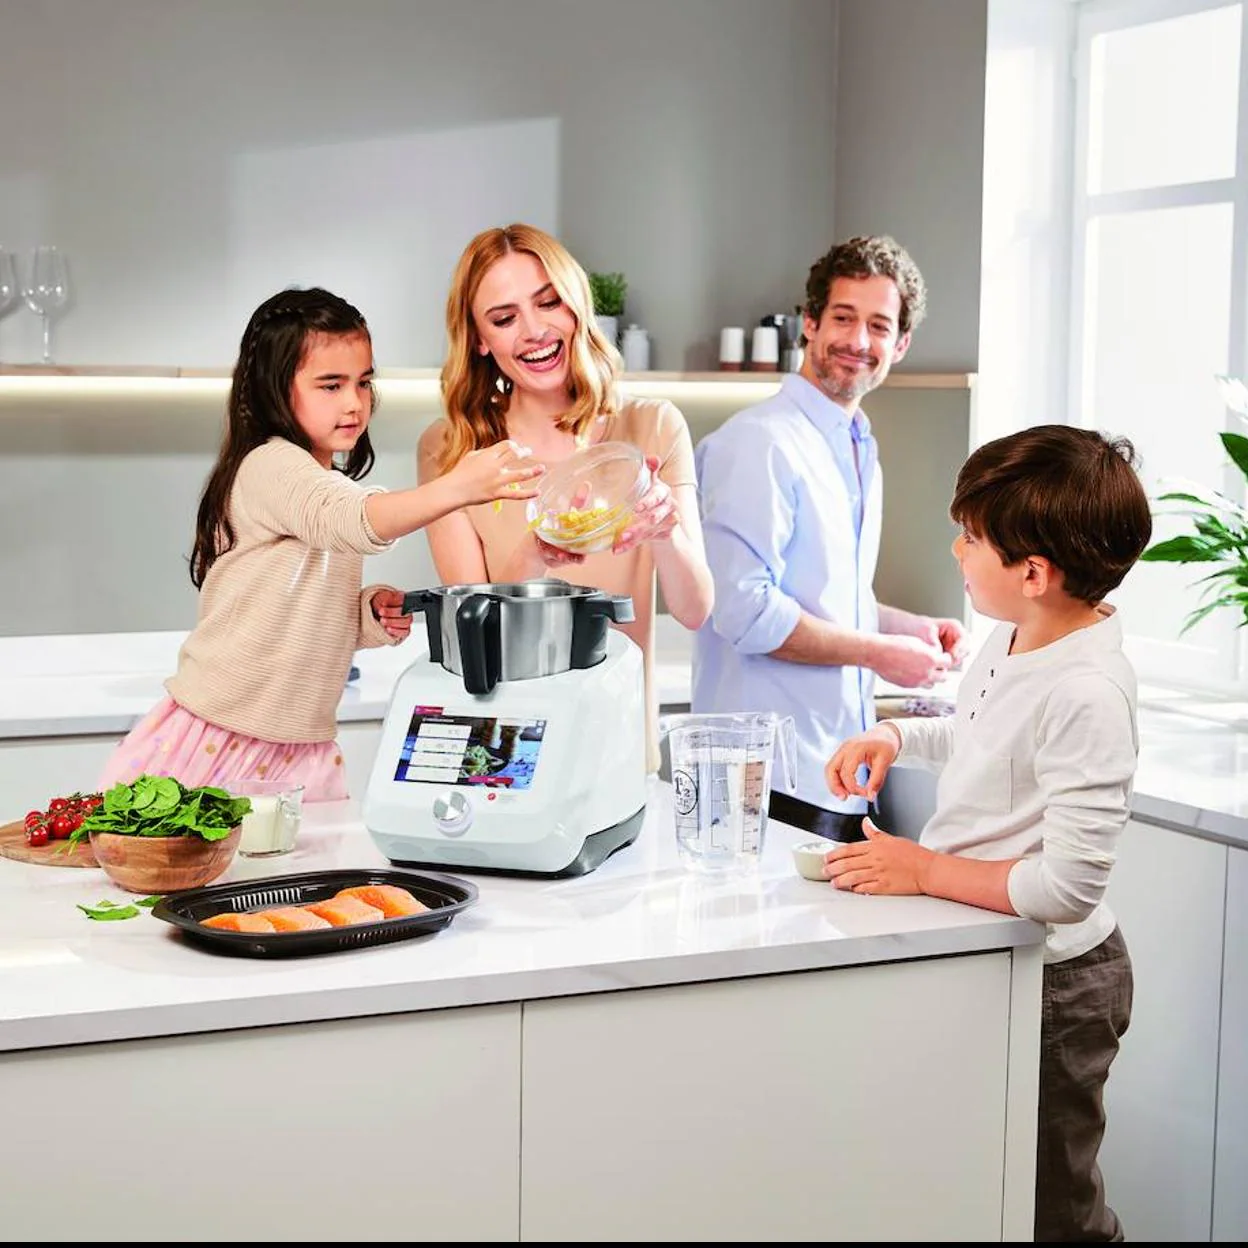 el supermercado GANA A thermomix: El robot de cocina de Lidl de 400 que es  mejor que la thermomix